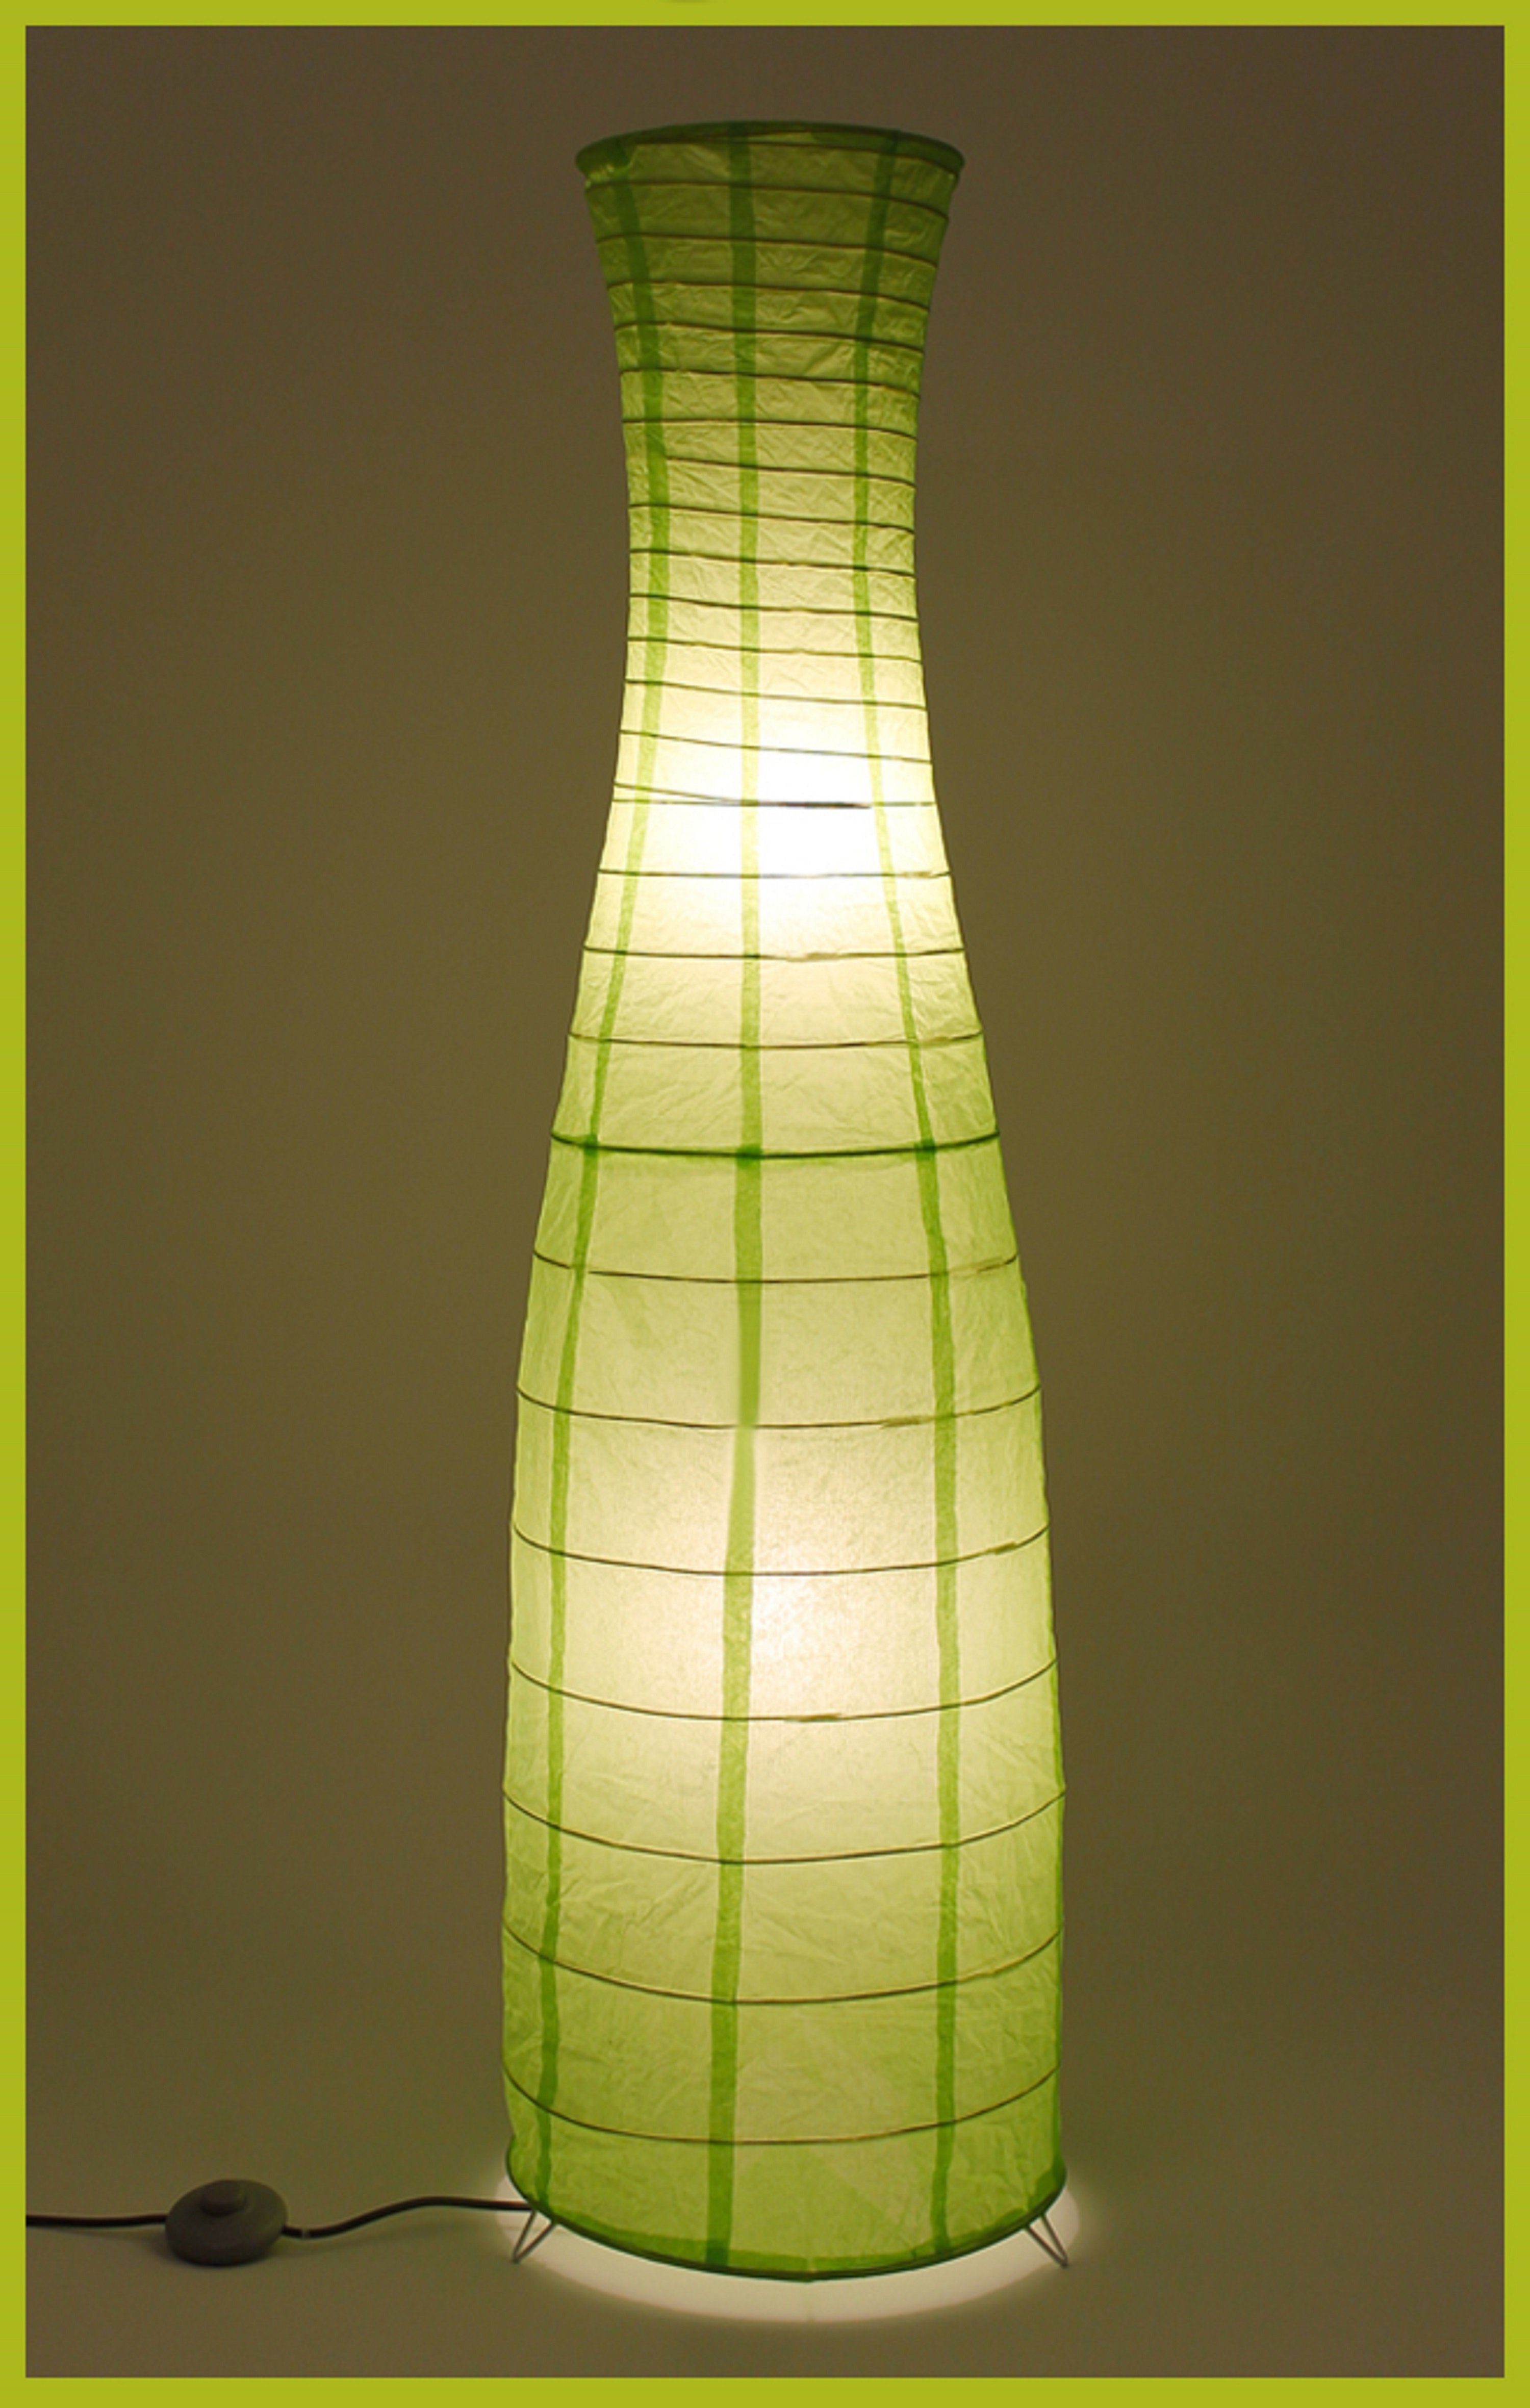 TRANGO LED Stehlampe, 1231-027L Design Leuchtmittel, E14 Rund, 125cm, Stehleuchte inkl. Lampenschirm *HANDMADE* grünen Reispapier mit Reispapierlampe Stehlampe Standlampe *SWEDEN* LED Wohnraumlampe, 2x Höhe: Form: LED